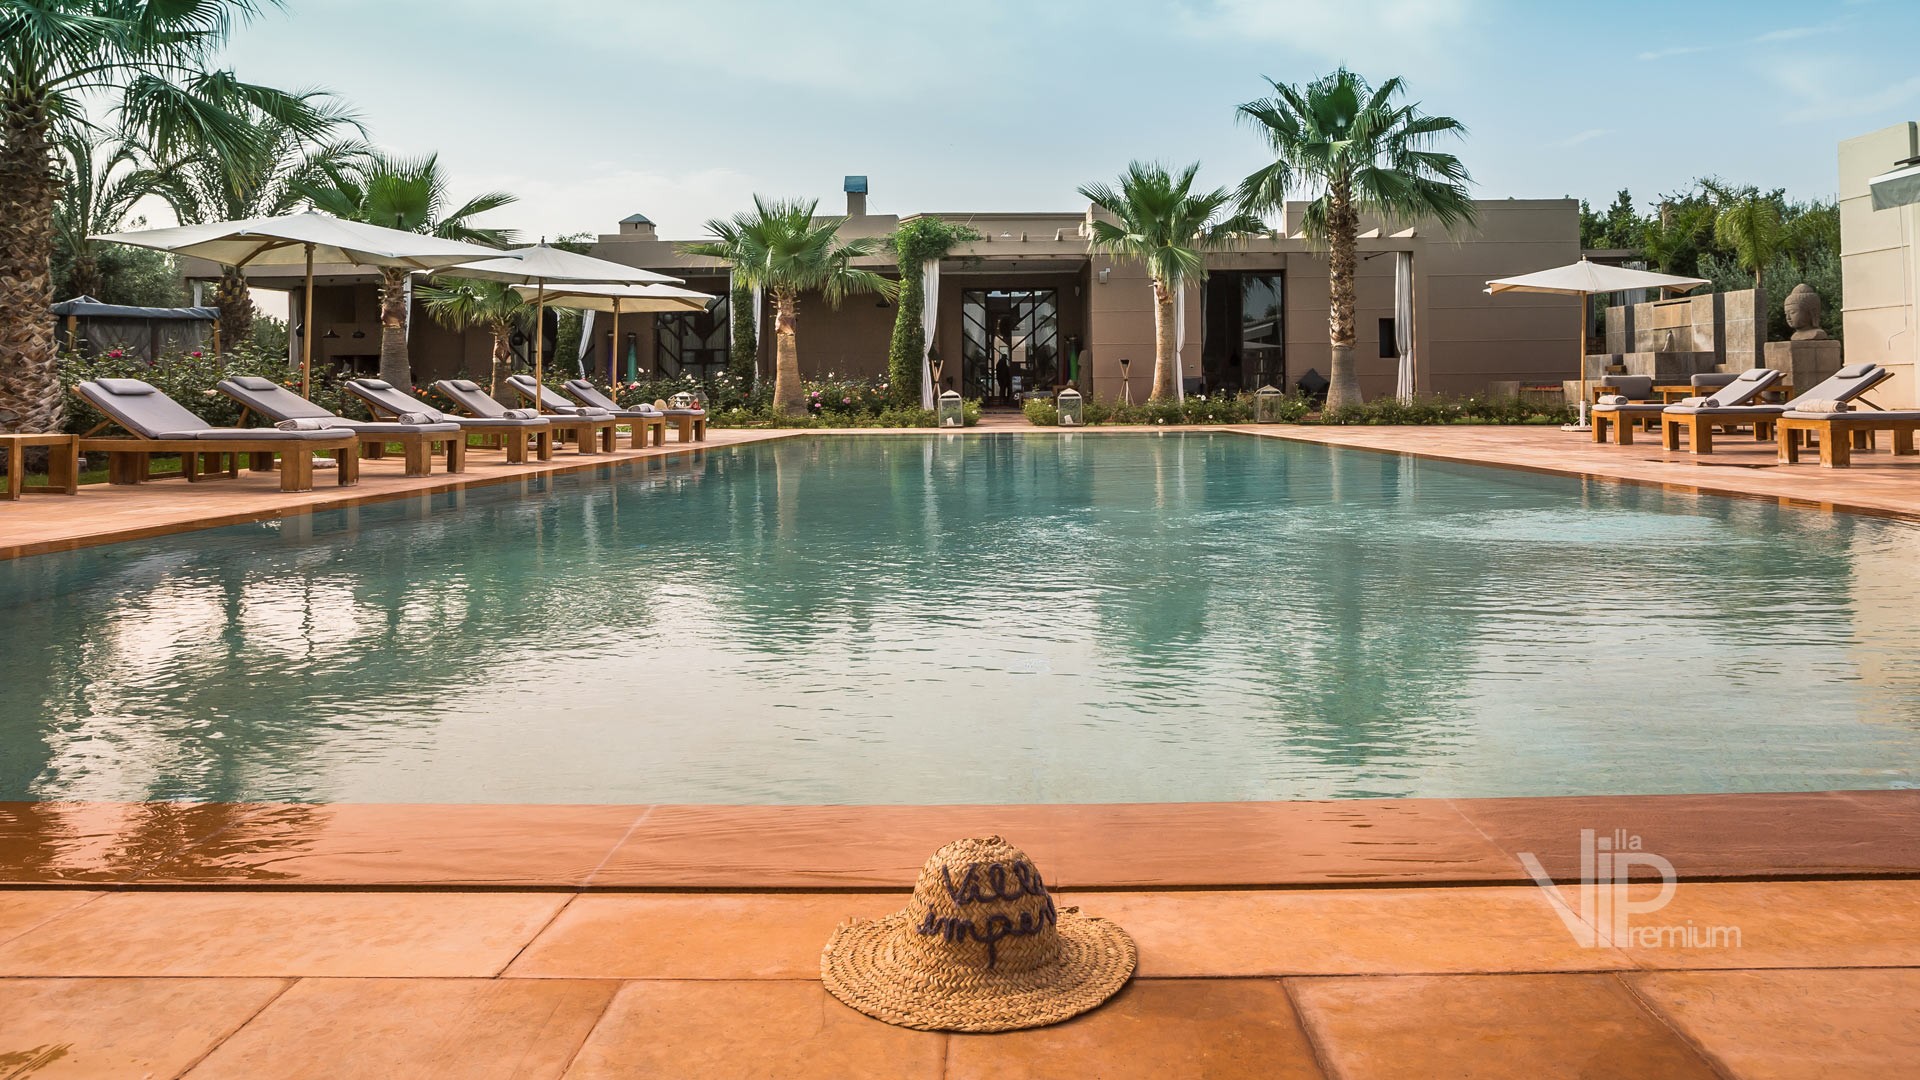 Location Villa India Marrakech